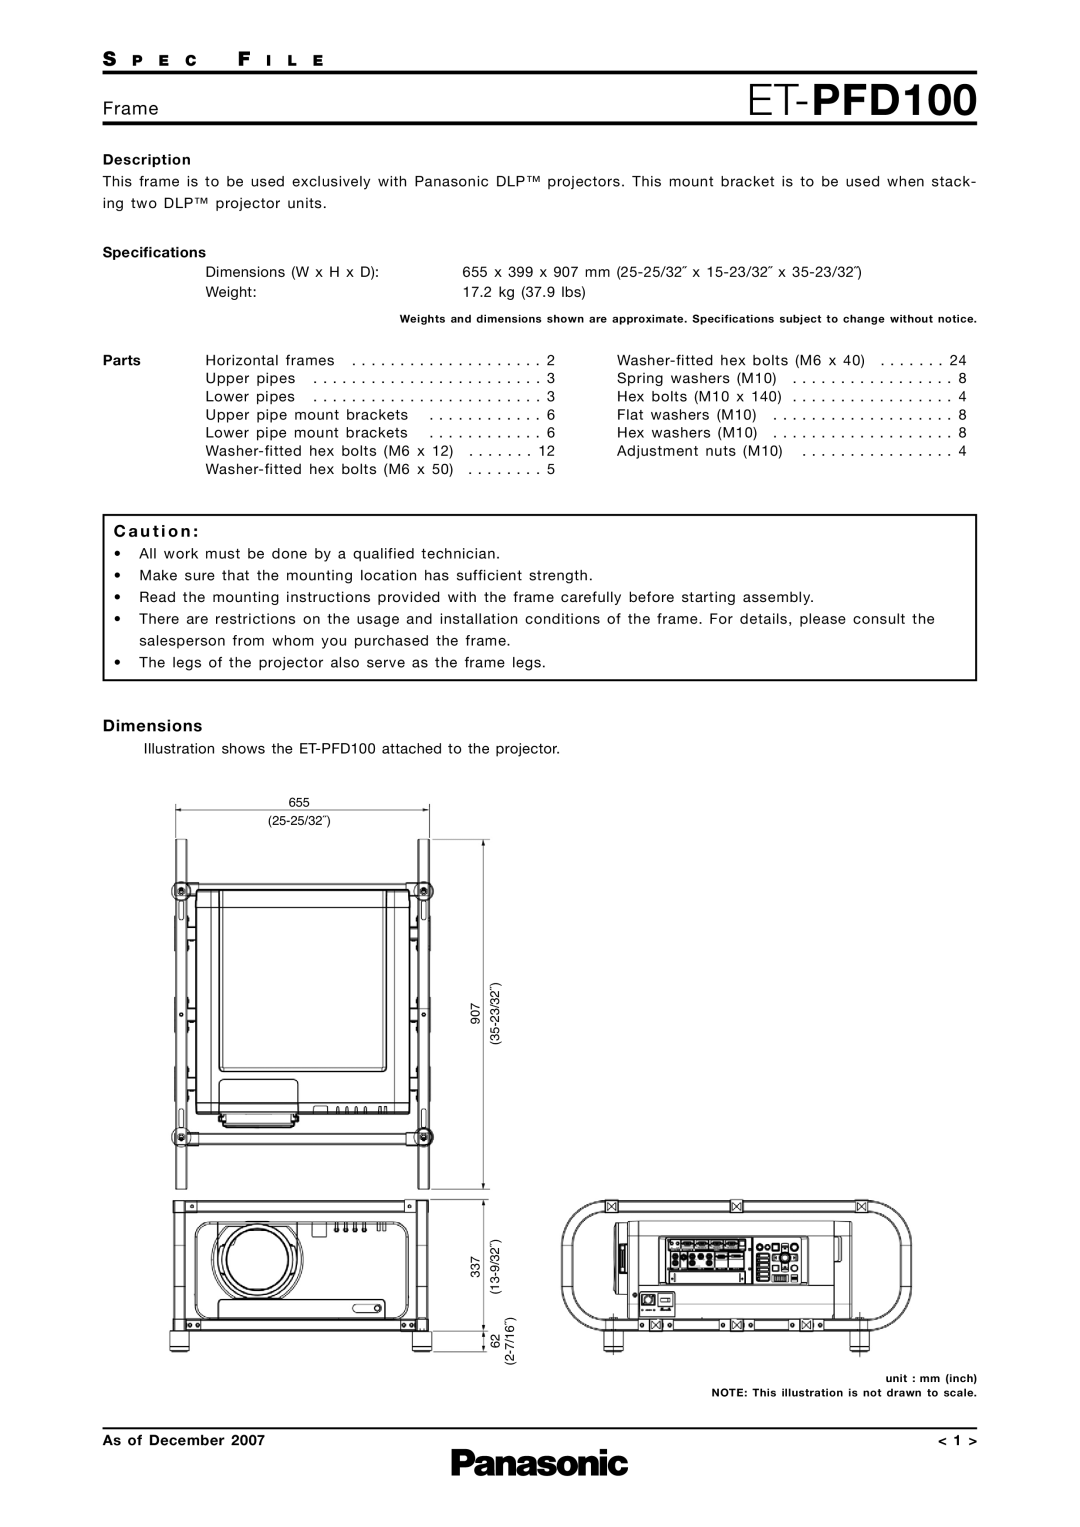 Panasonic ET-PFD100 dimensions Frame, C a u t i o n, Dimensions, S P E C F I L E, Description, Specifications, Parts 